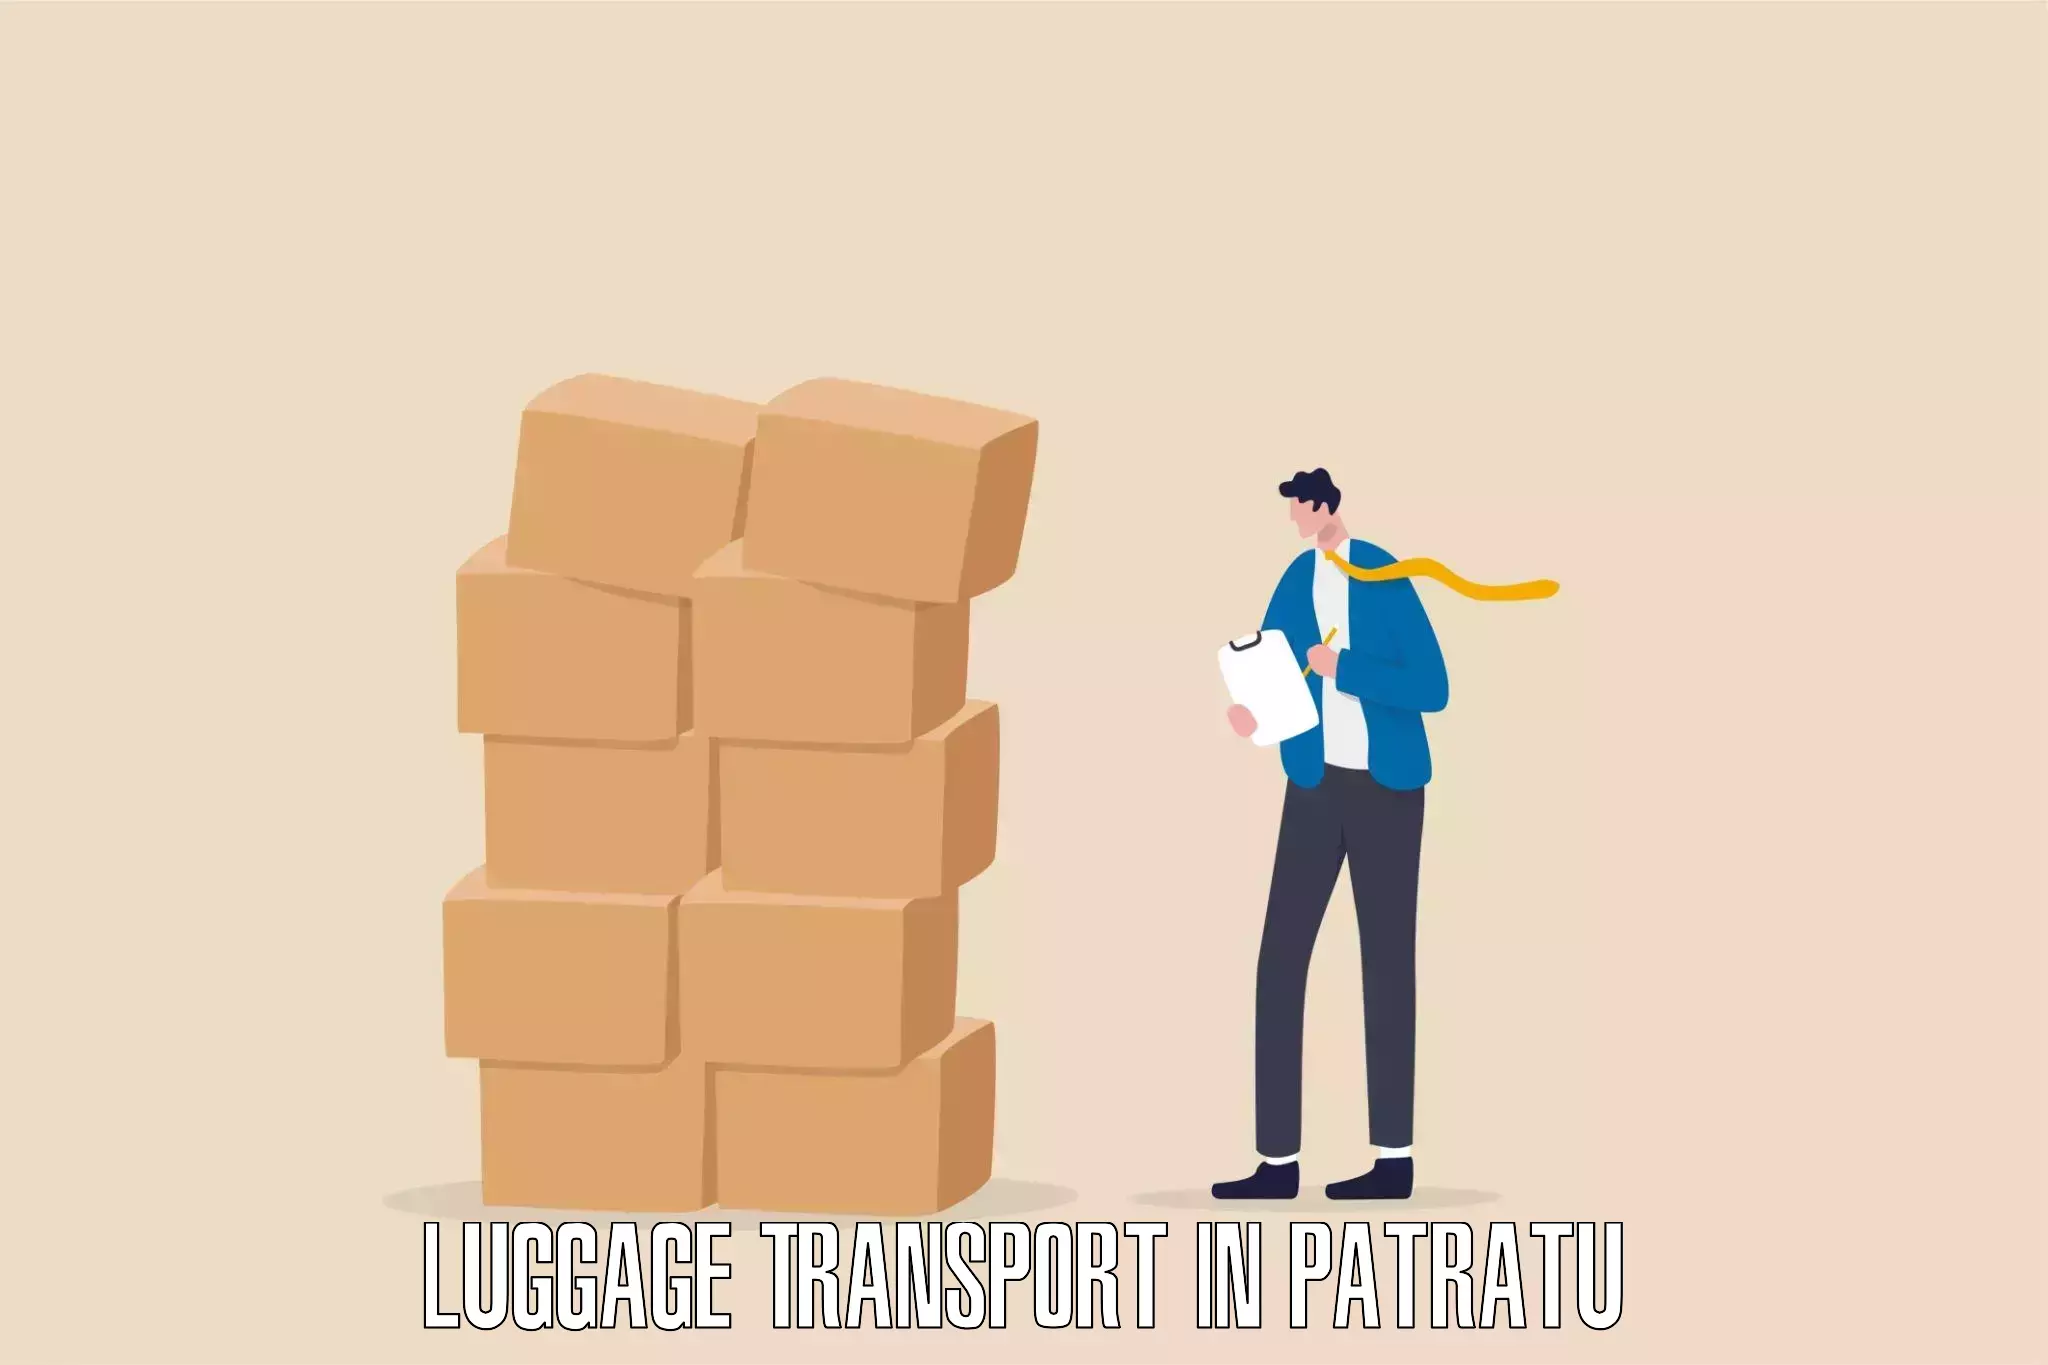 Automated luggage transport in Patratu